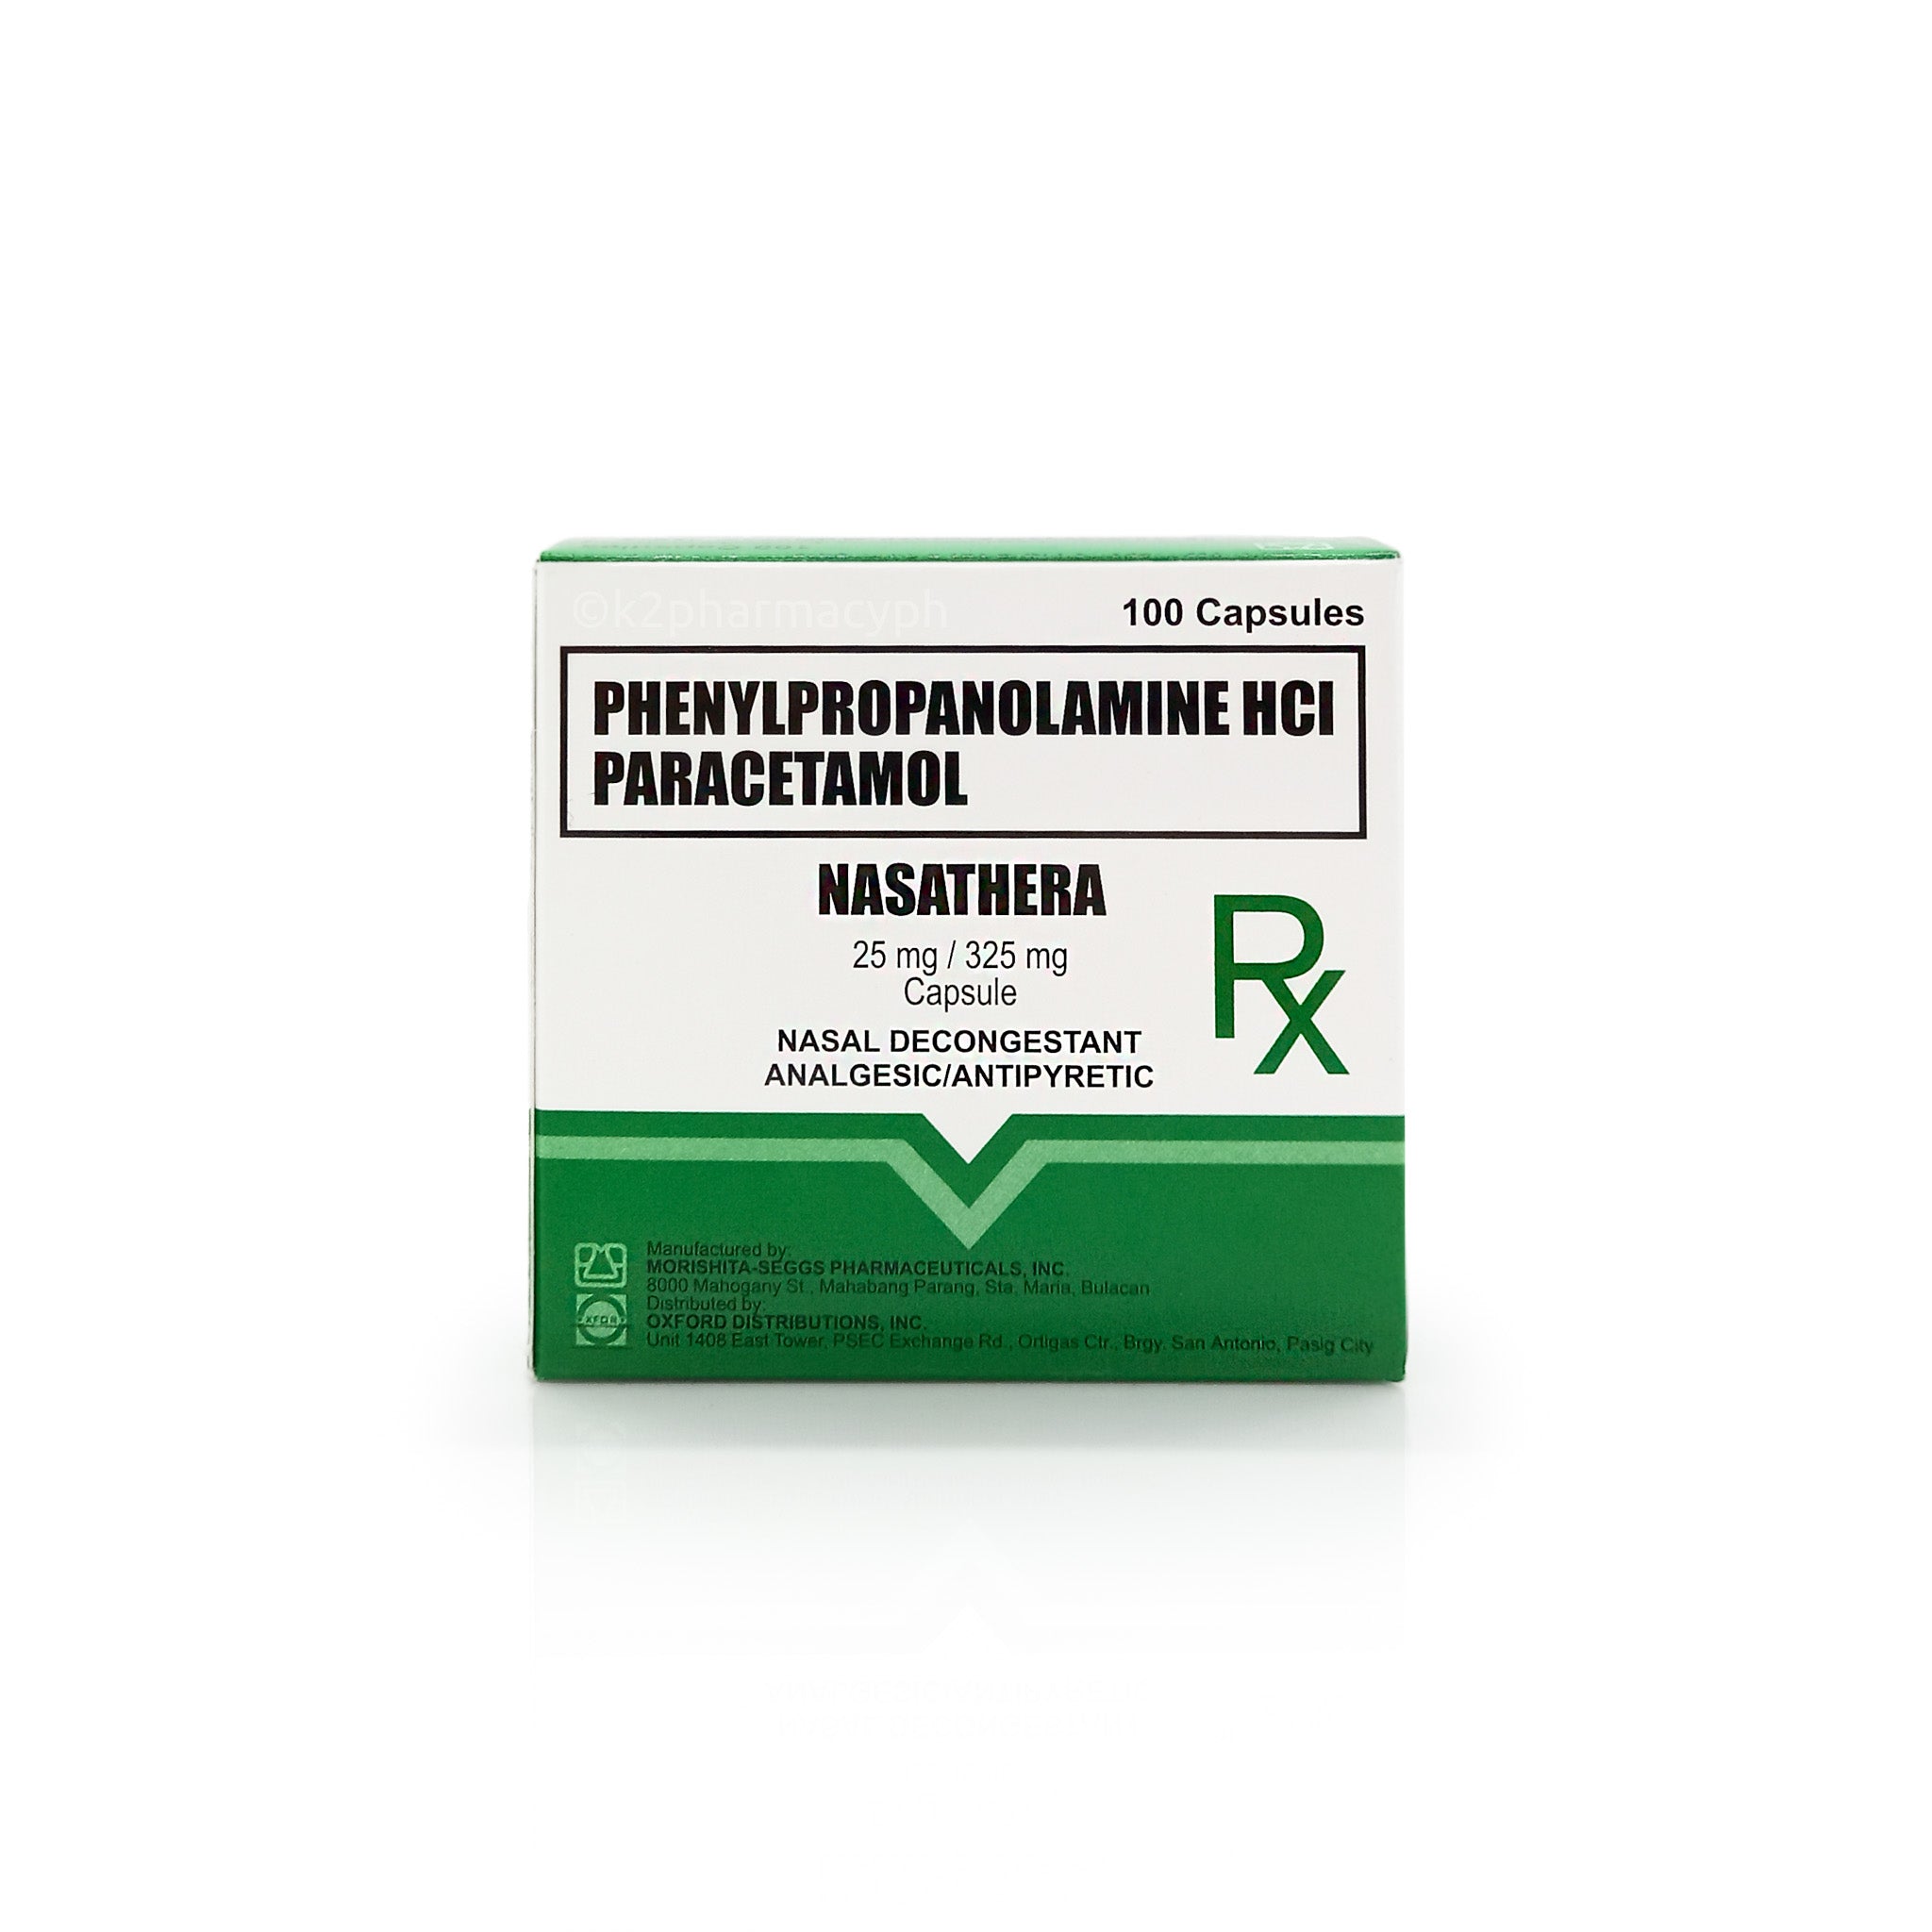 Goracet Tramadol Paracetamol 37.5 mg/325mg Tablets